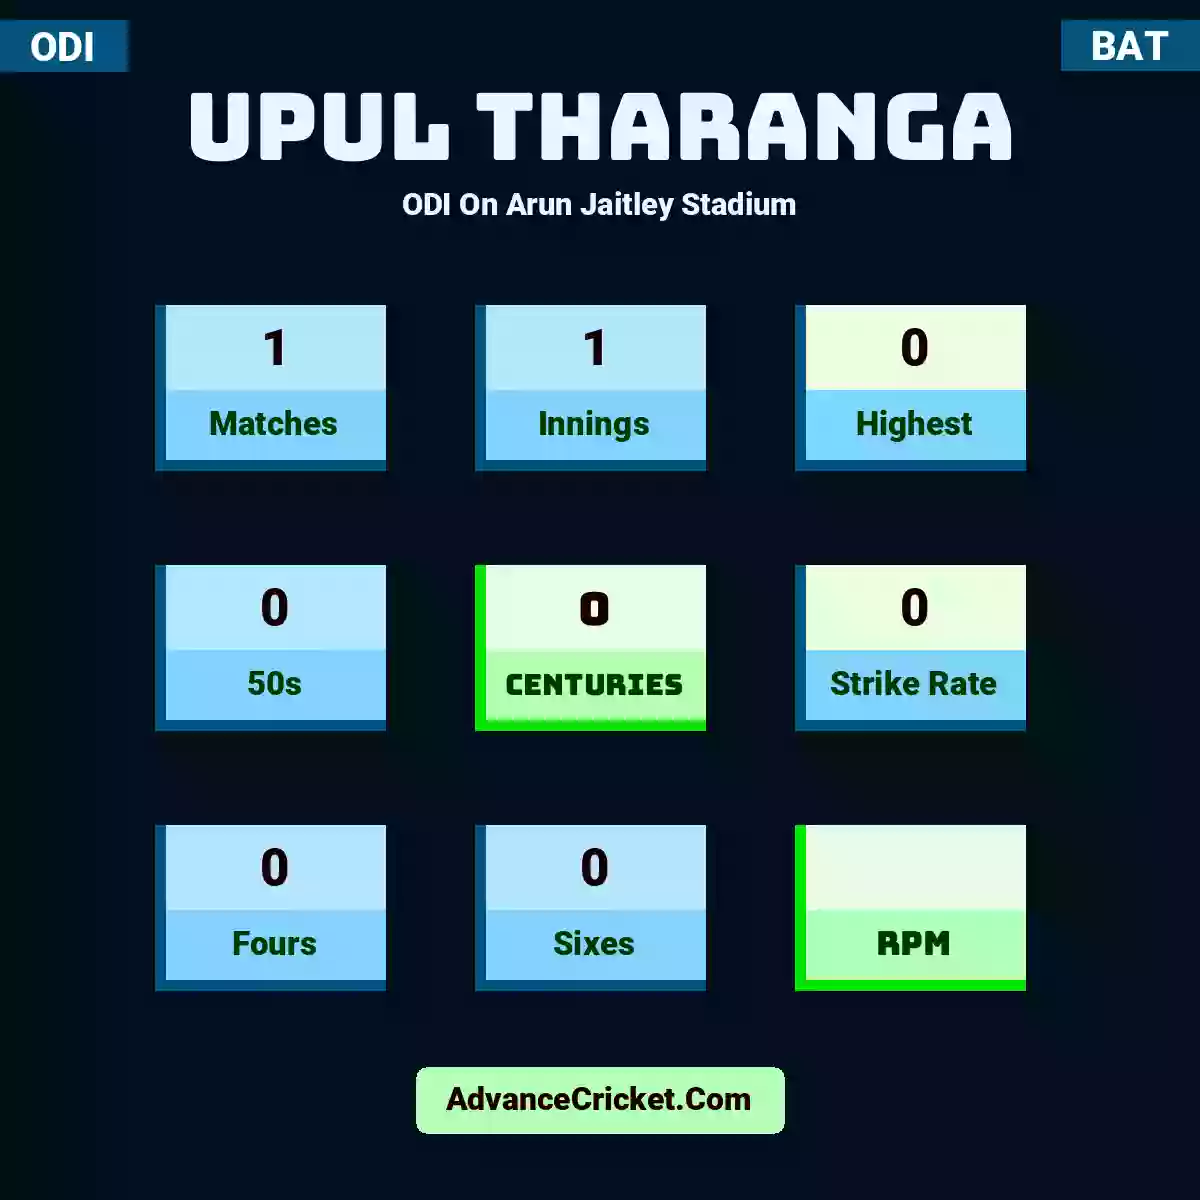 Upul Tharanga ODI  On Arun Jaitley Stadium, Upul Tharanga played 1 matches, scored 0 runs as highest, 0 half-centuries, and 0 centuries, with a strike rate of 0. U.Tharanga hit 0 fours and 0 sixes.